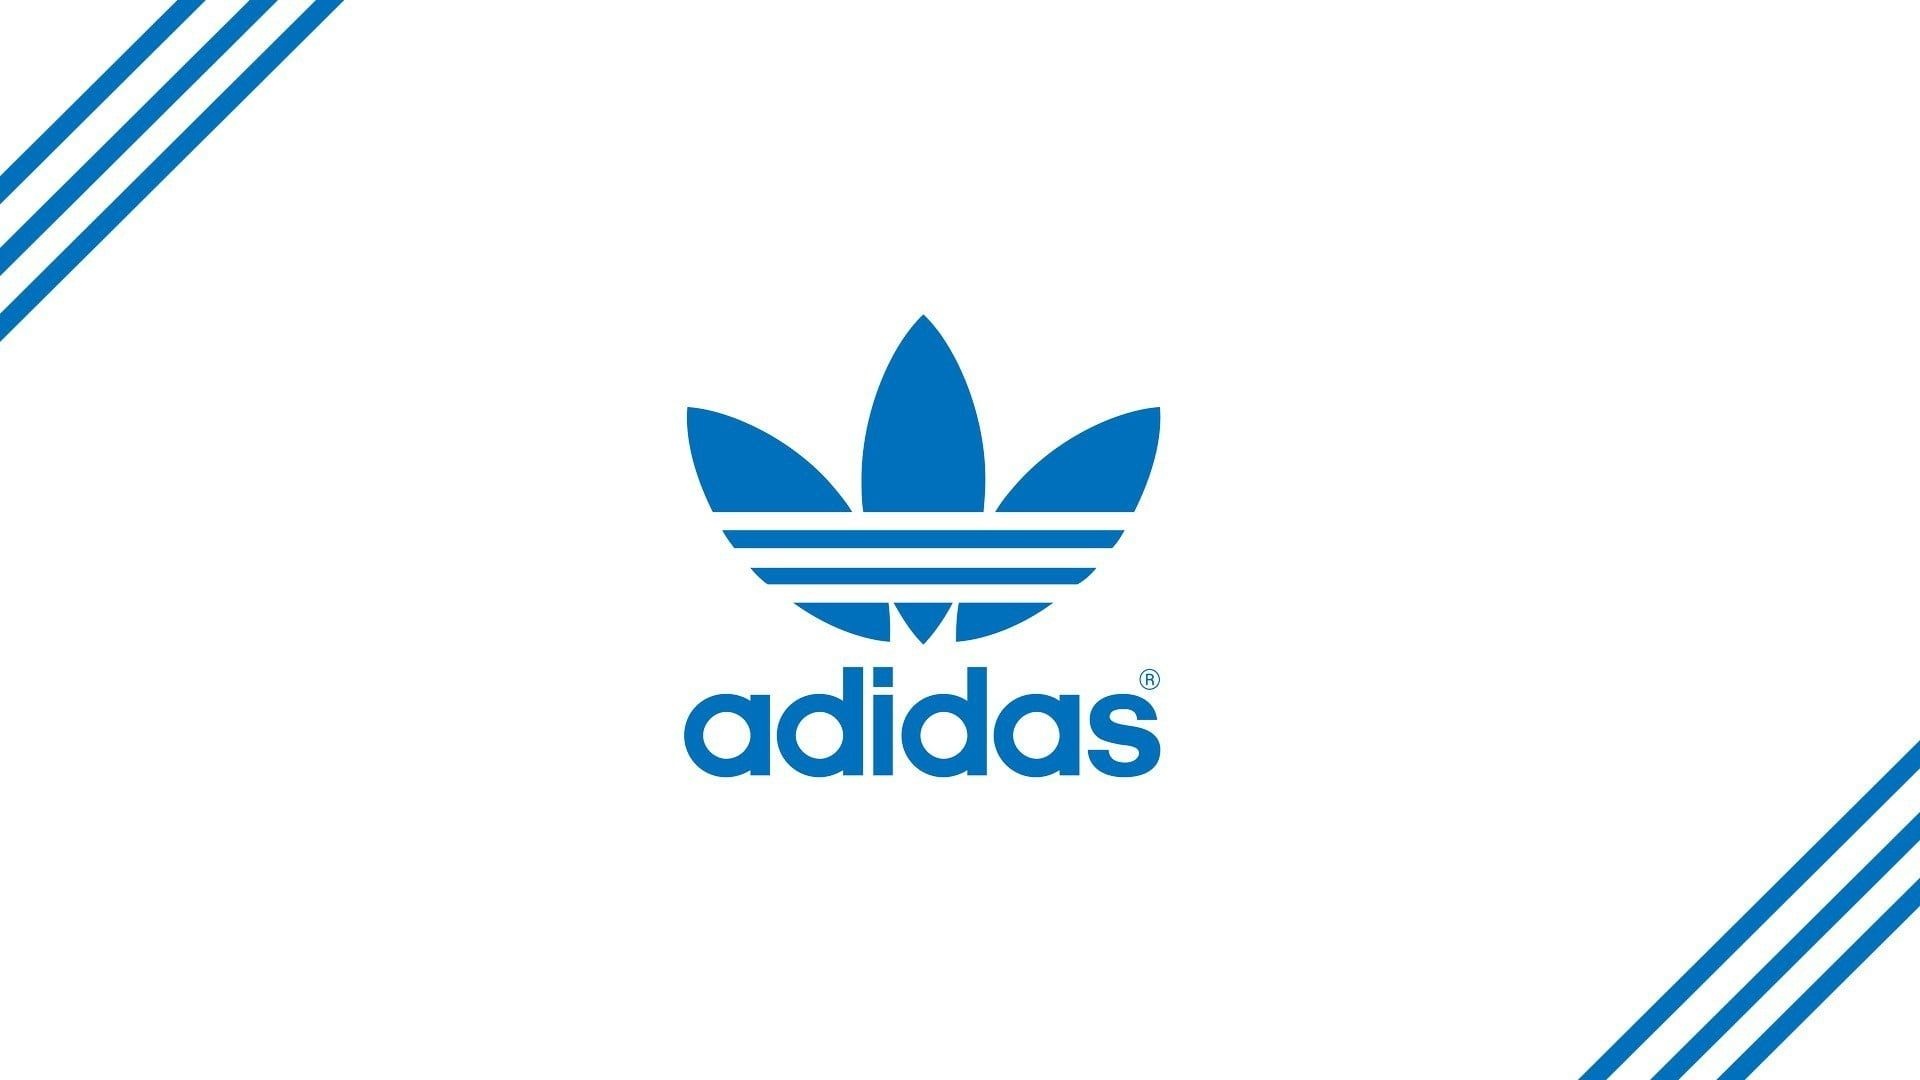 Adidas logo wallpaper, Text, Communication, Adidas logo, 1920x1080 Full HD Desktop